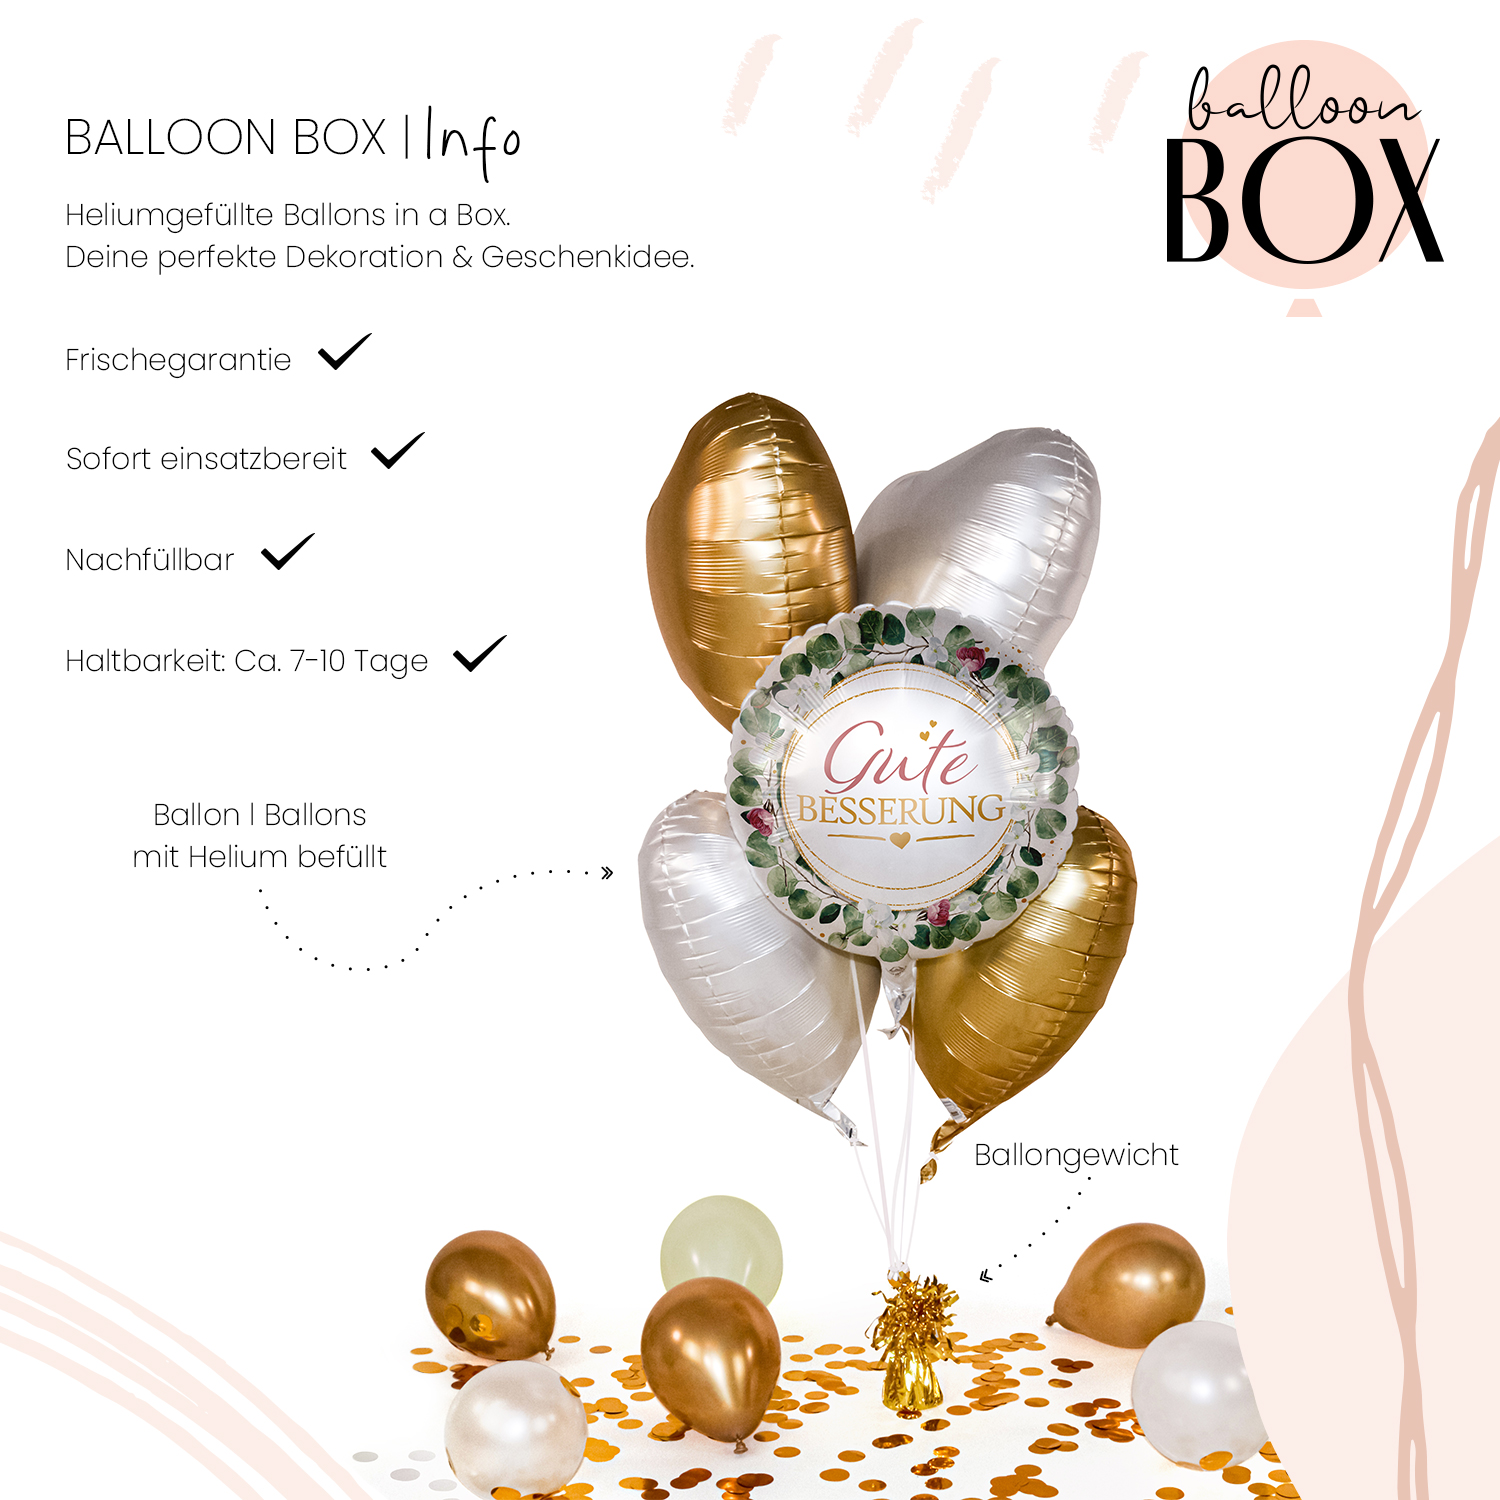 Heliumballon in a Box - Gute Besserung Greenery